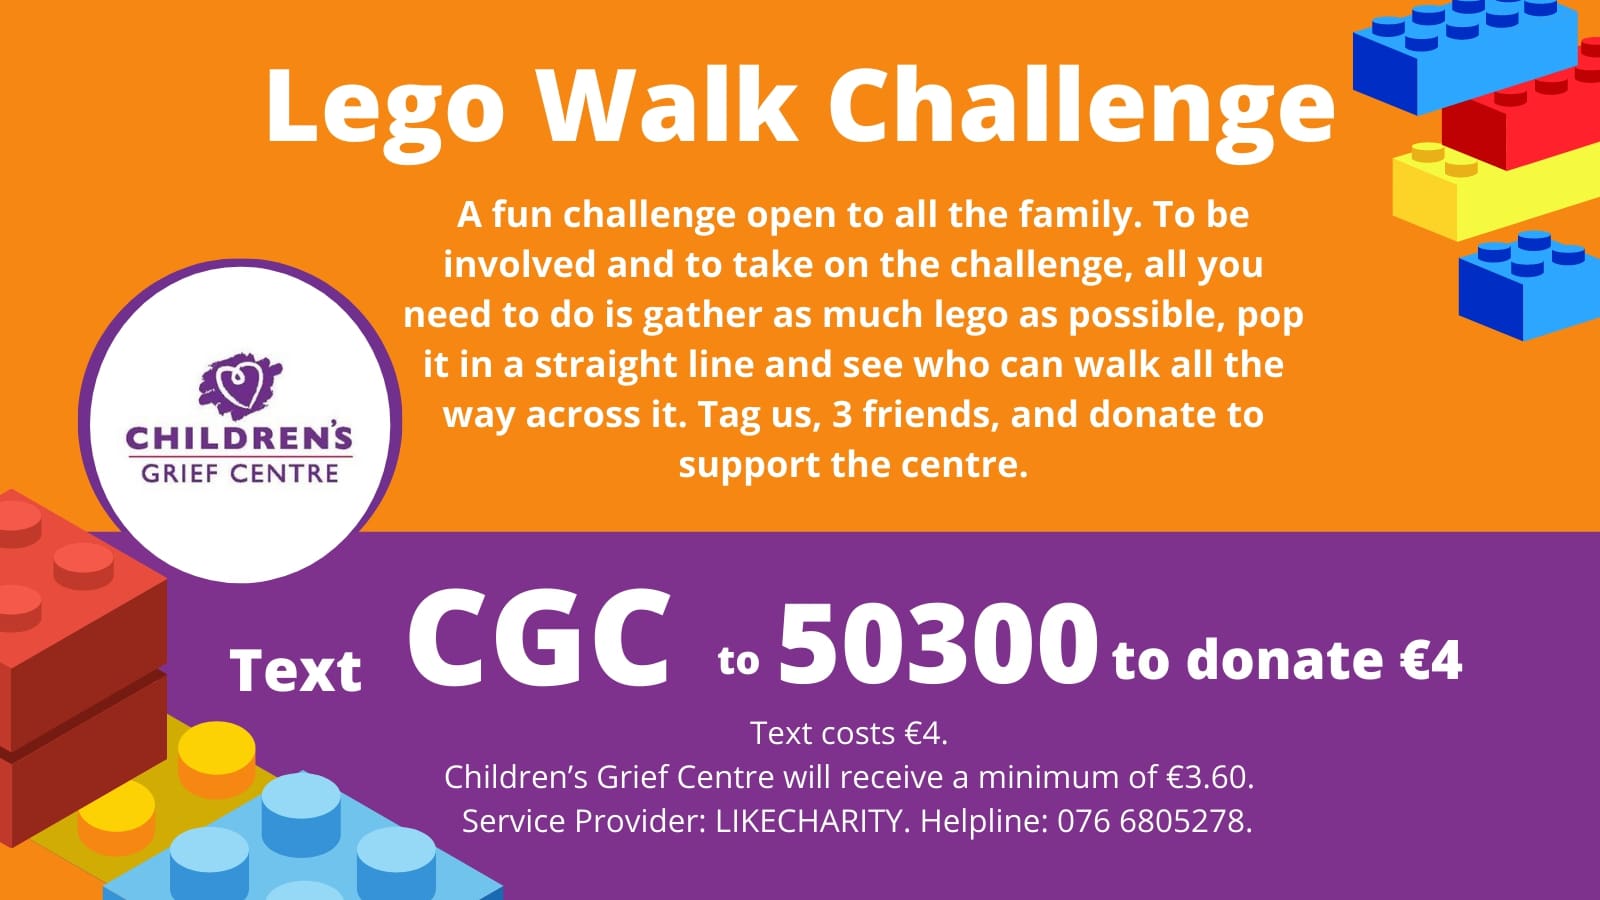 Childrens Grief Centre Lego Walk Challenge will help raise funds to refurbish their new grief centre.